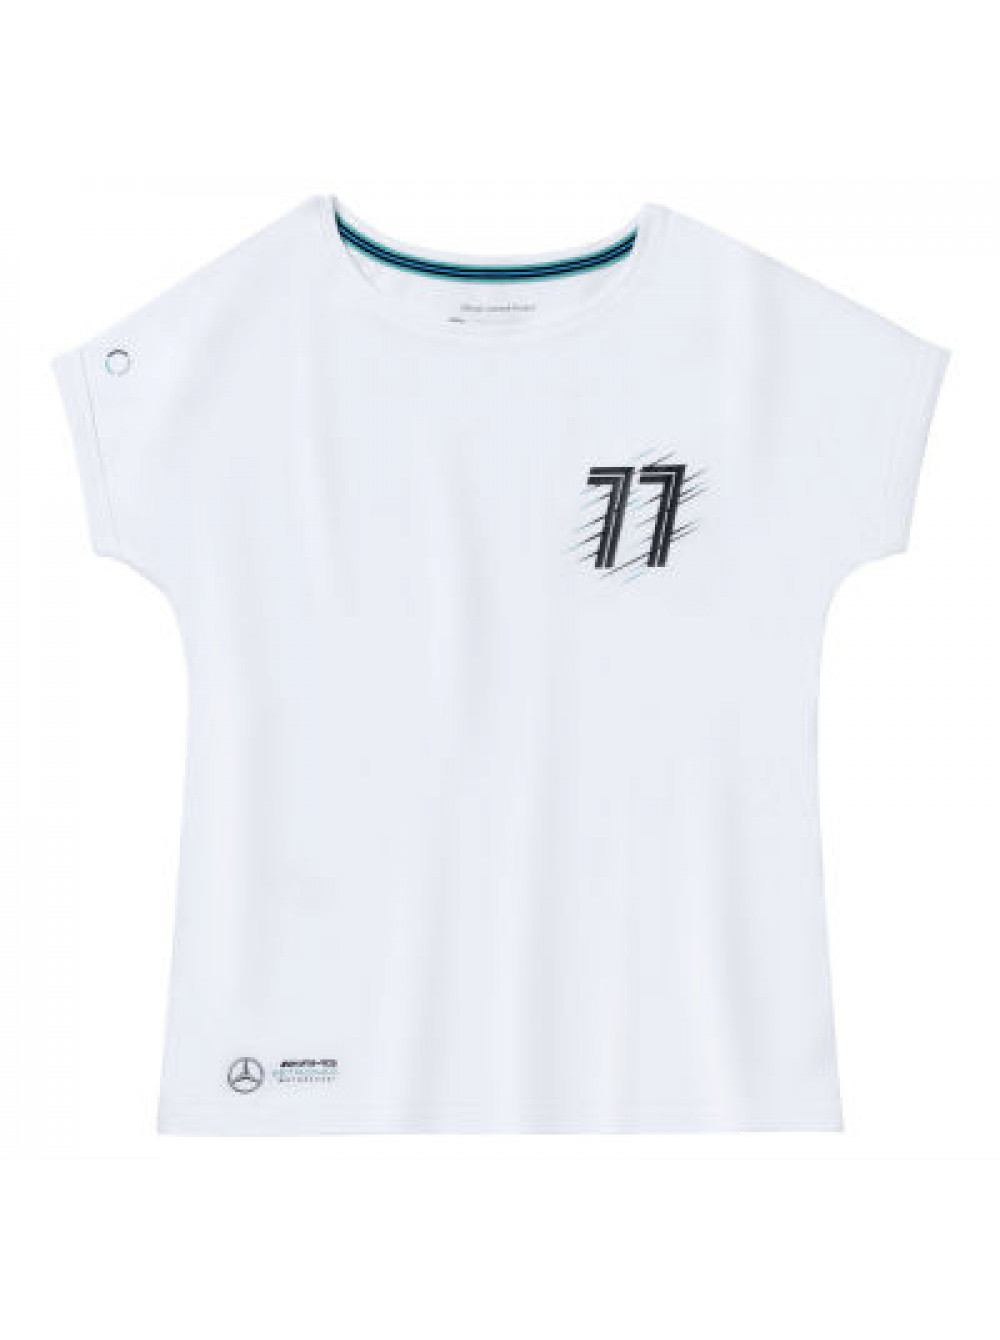 Женская футболка Mercedes AMG Petronas Women's T-shirt, Valtteri Bottas, White L